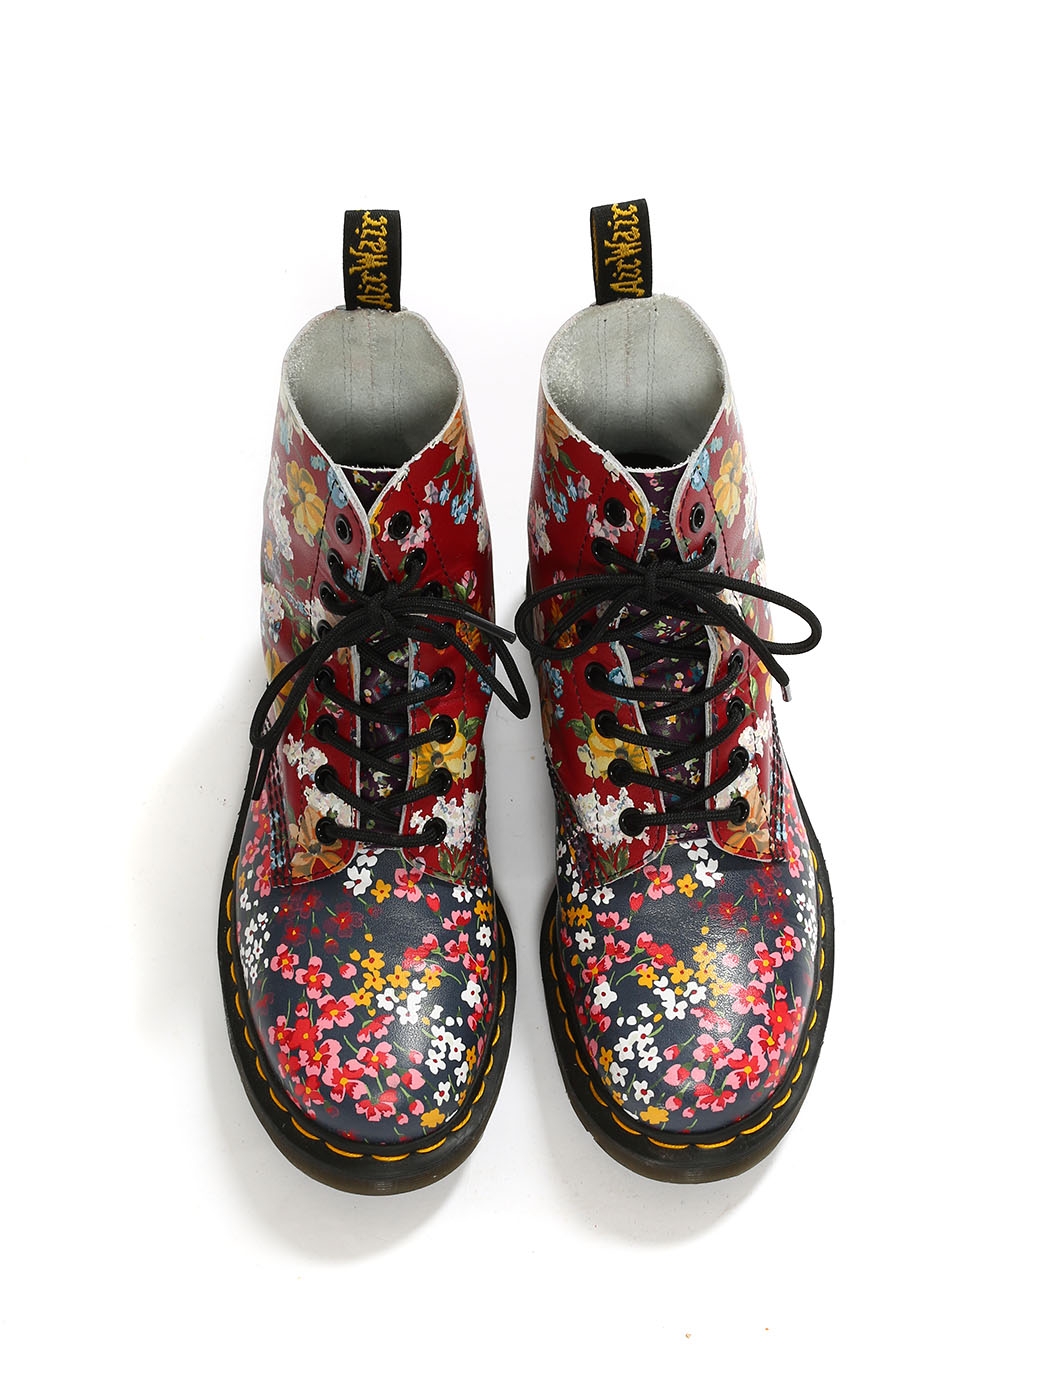 Boutique DR MARTENS Floral Pascal floral laced up boots Retail price €180 Size 39